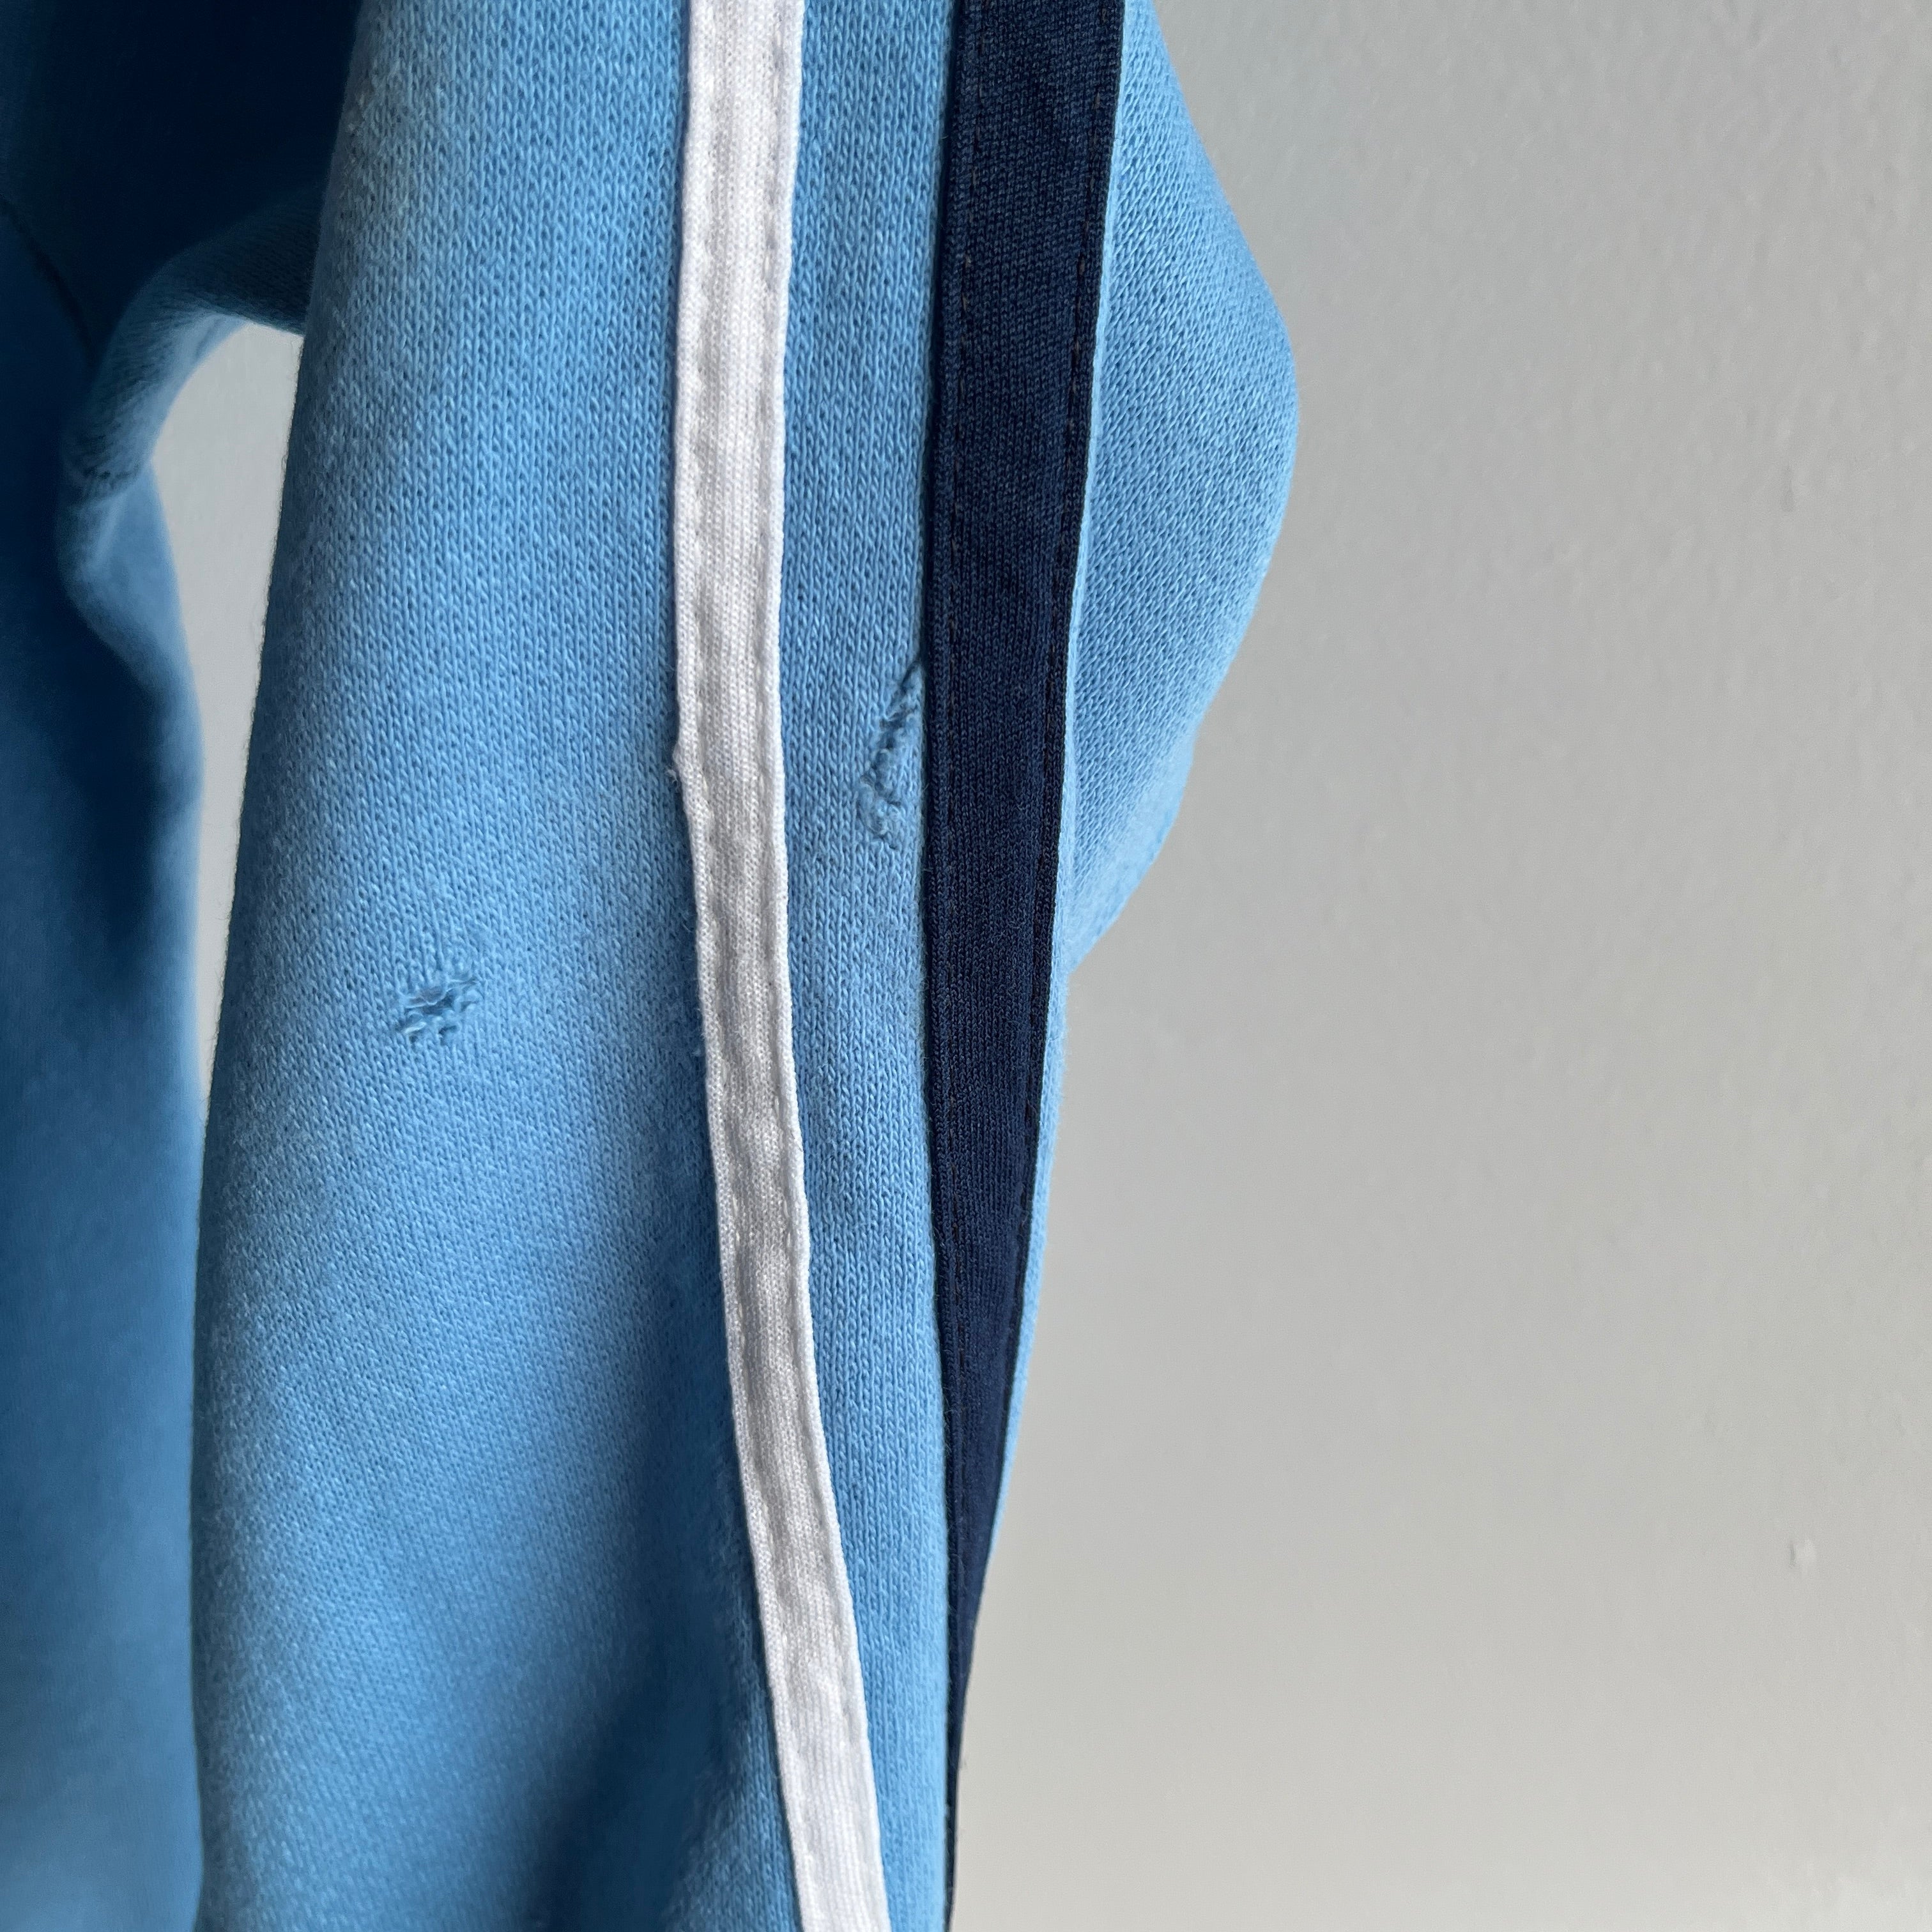 1970/80s Sleeve Stripe Sweatshirt in a Periwinkle-ish Blue